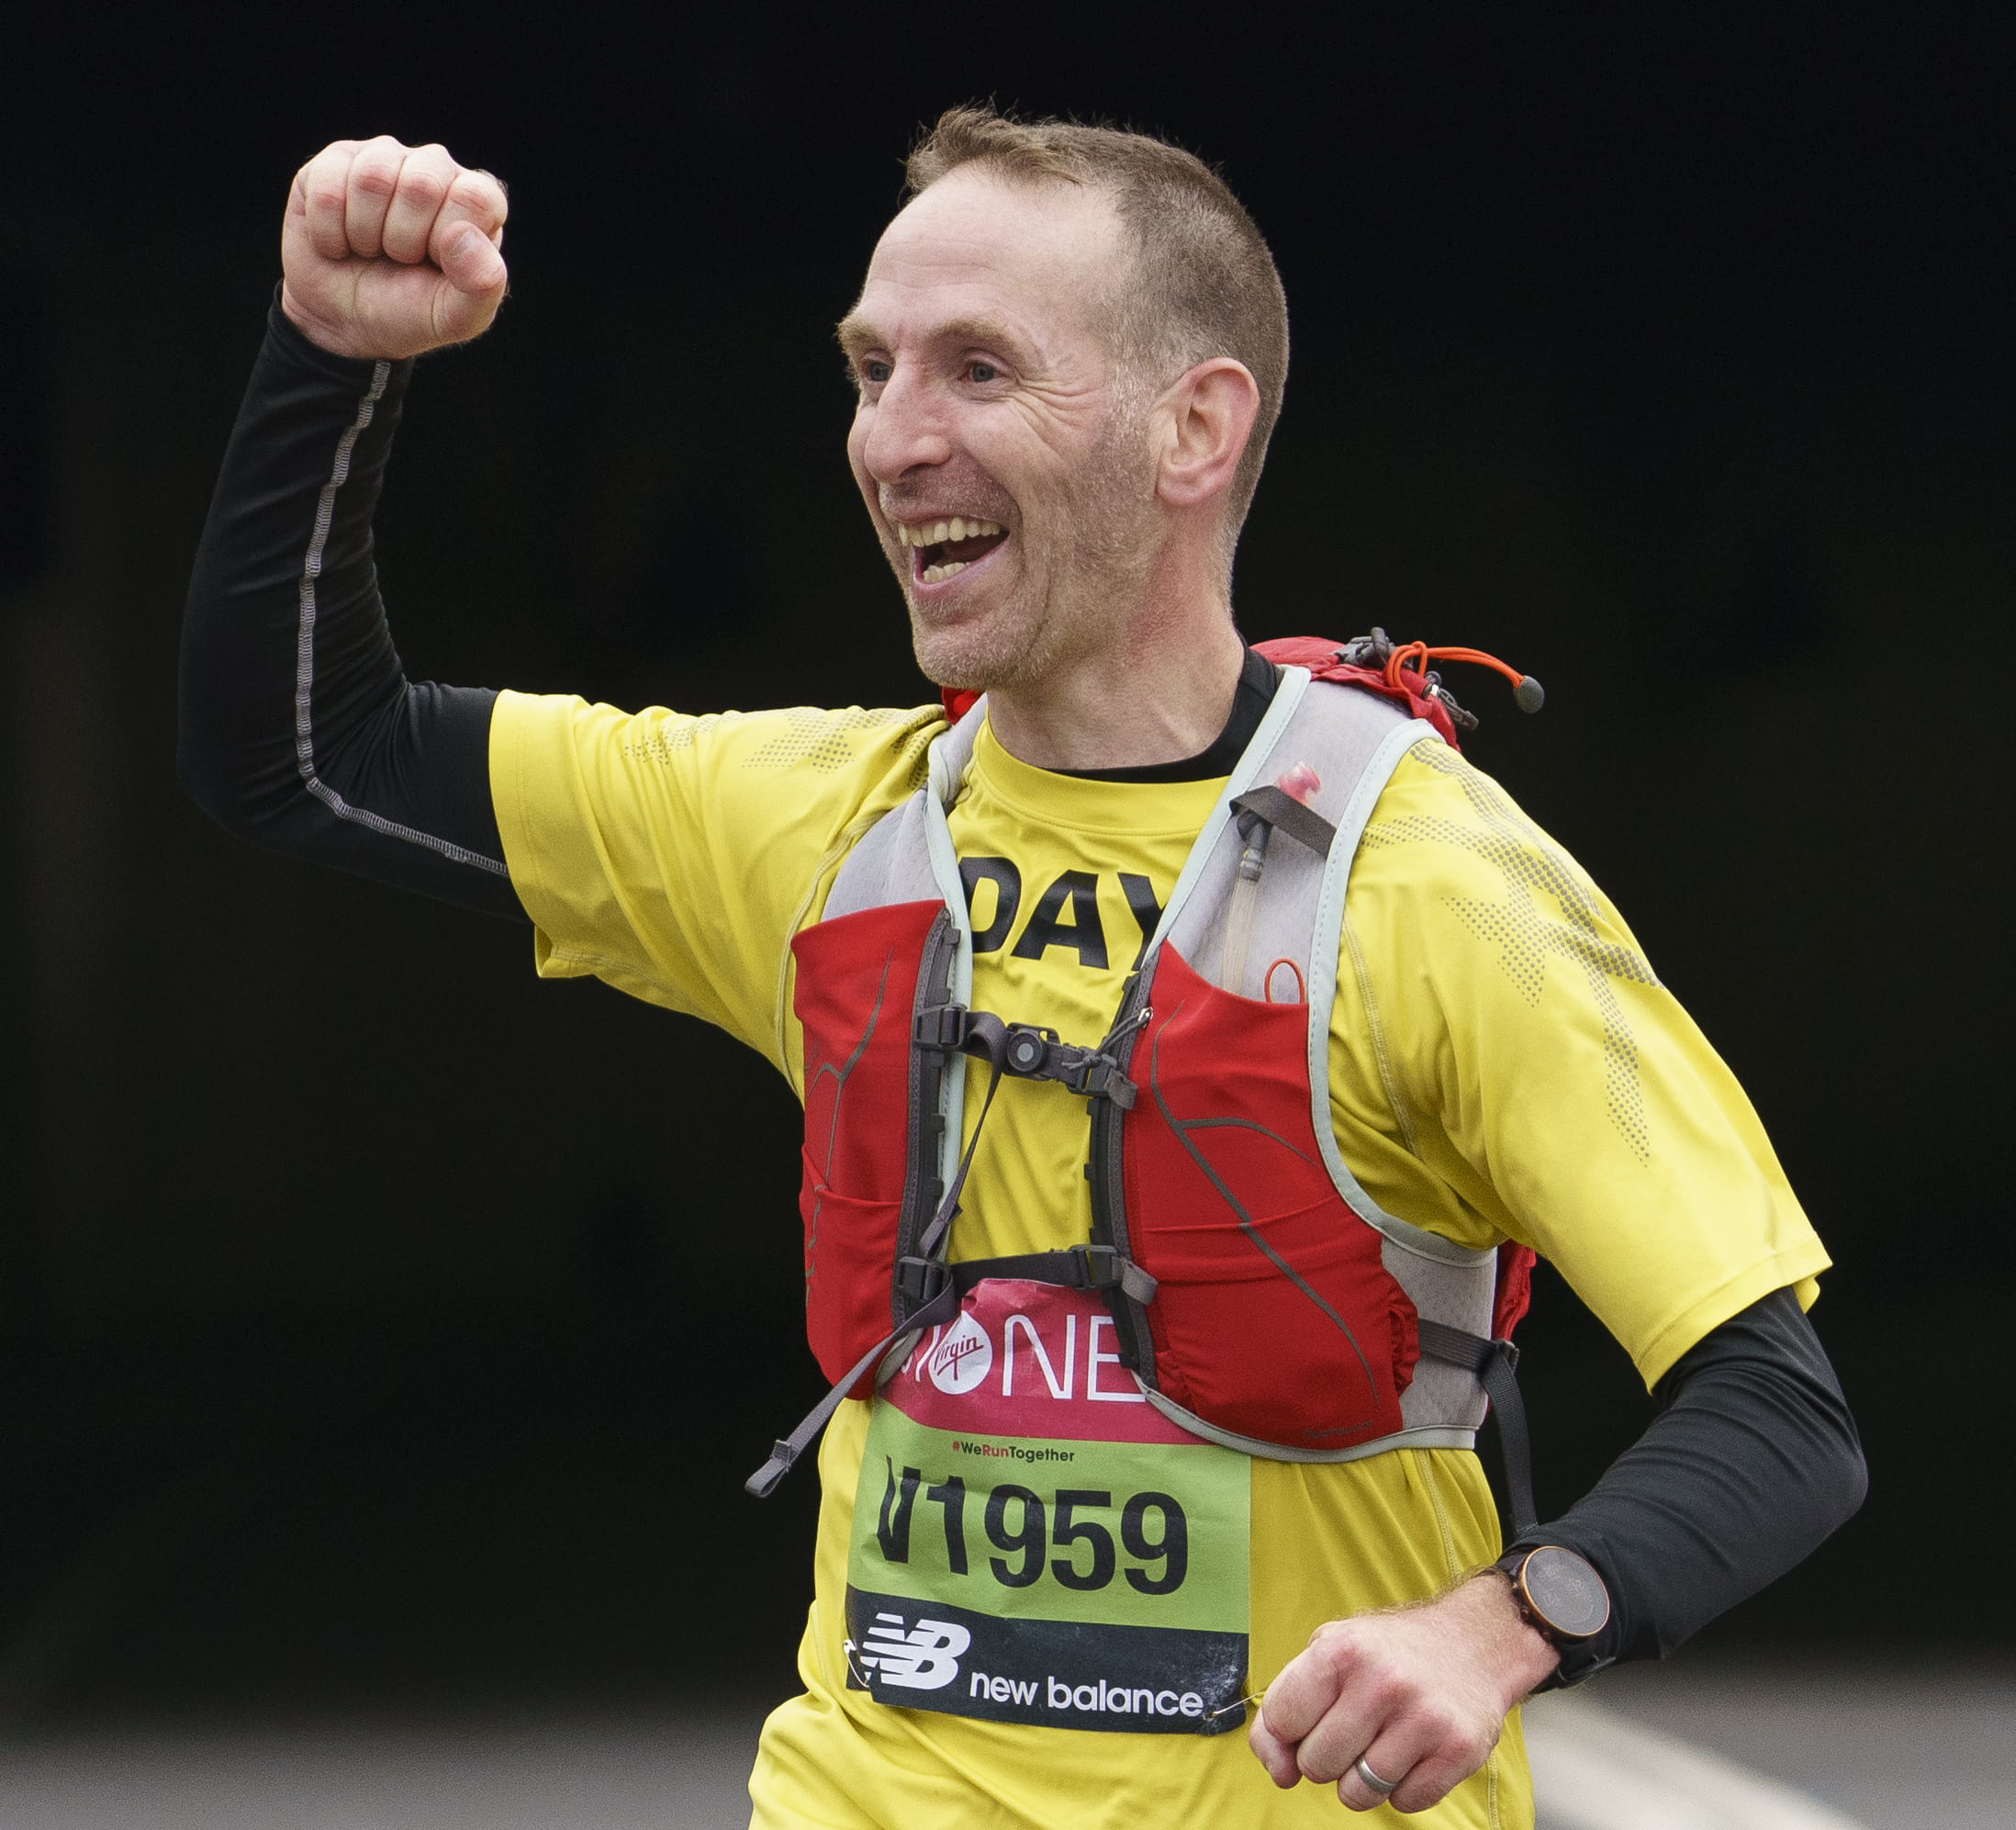 A runner celebrates during the London Marathon